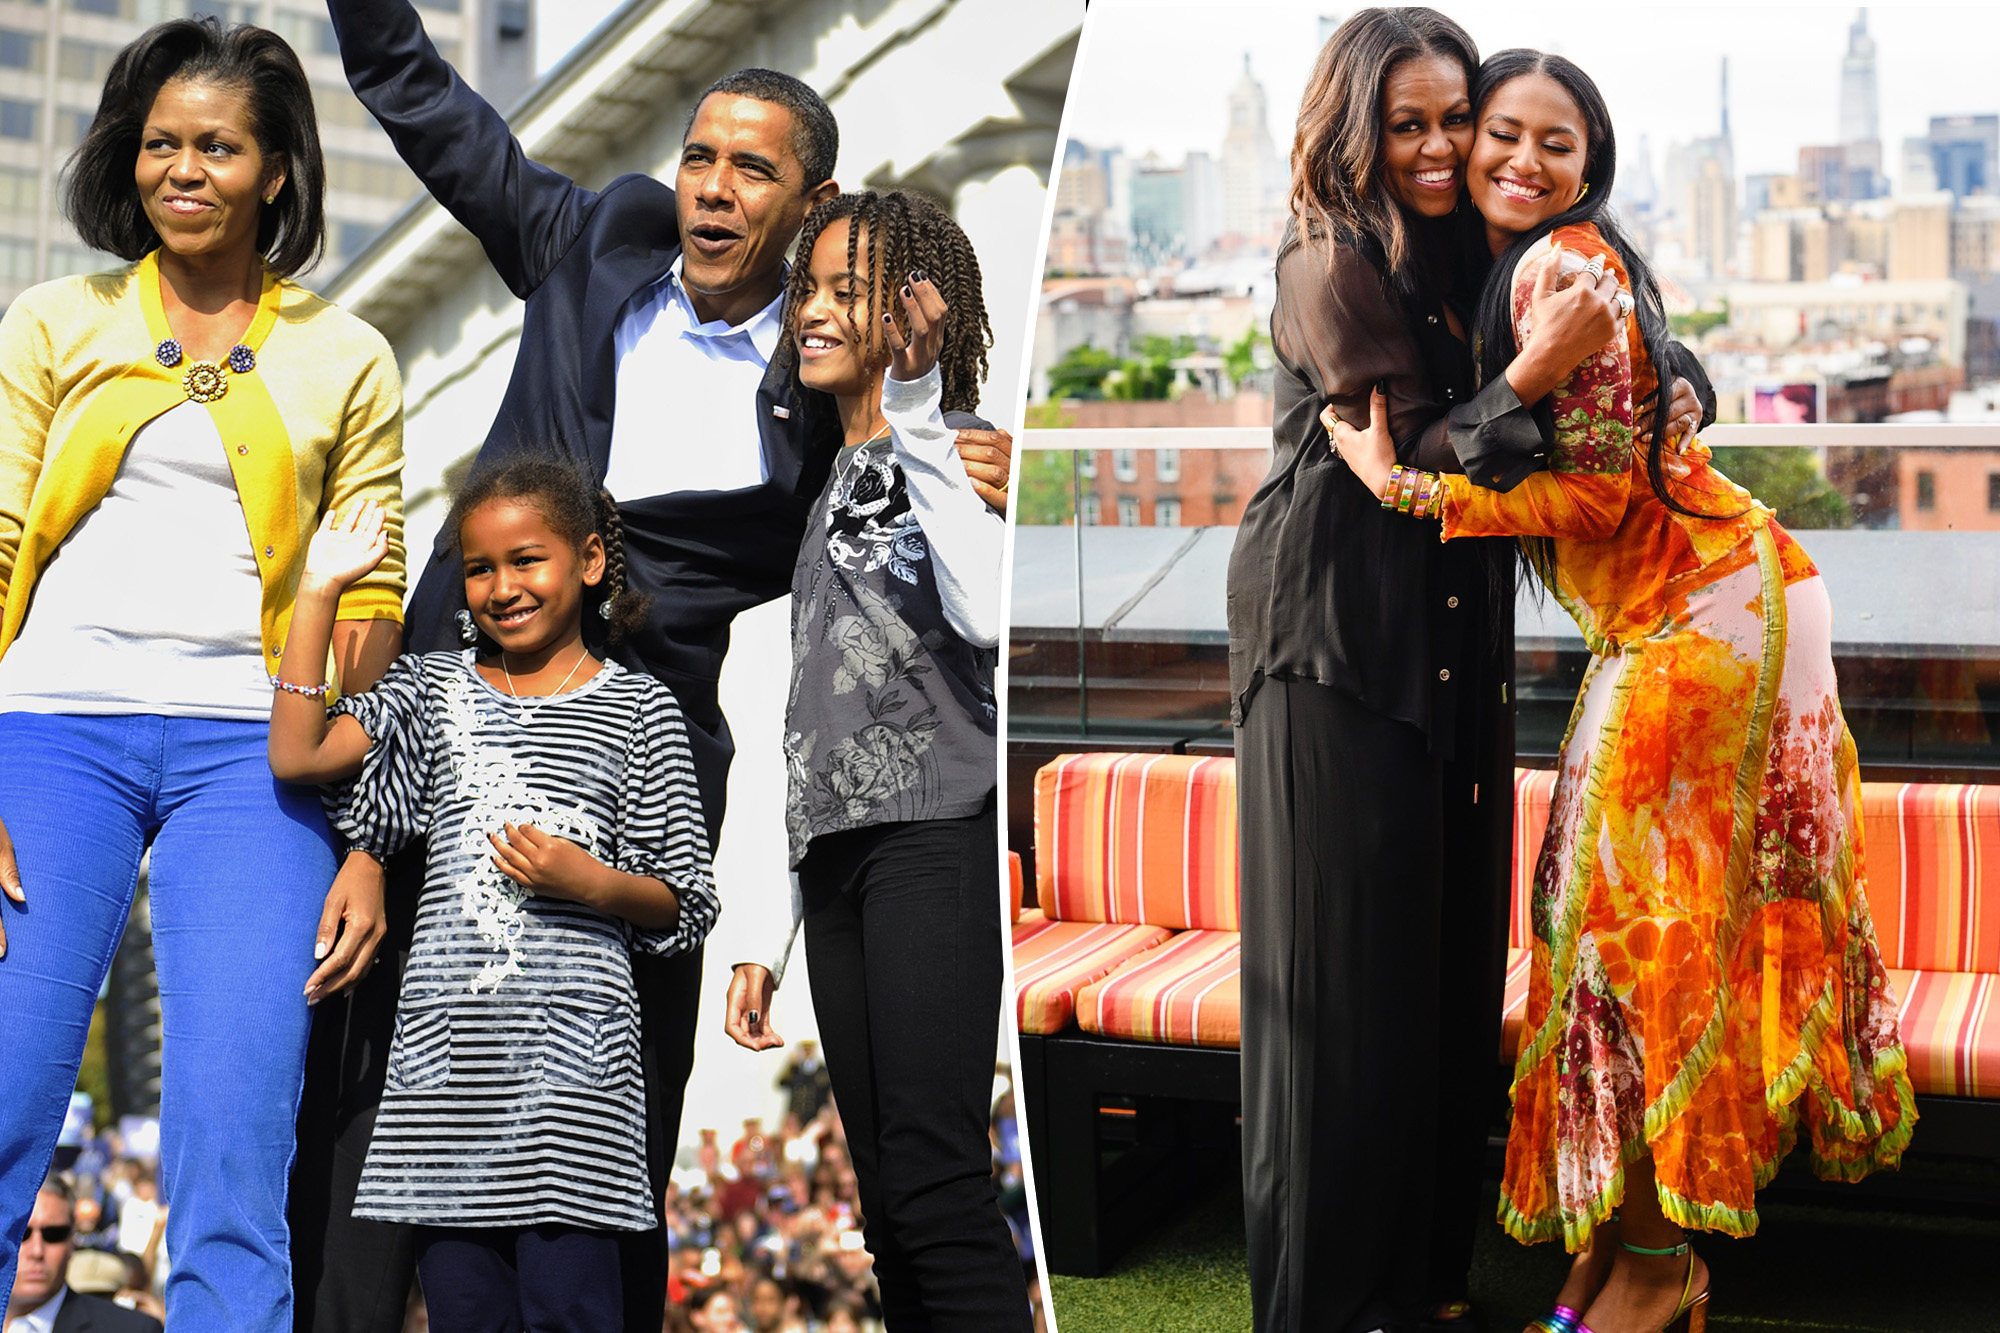 Sasha Obama's 23rd Birthday Celebration: A Glimpse into the Obama Family's Joyful Moments